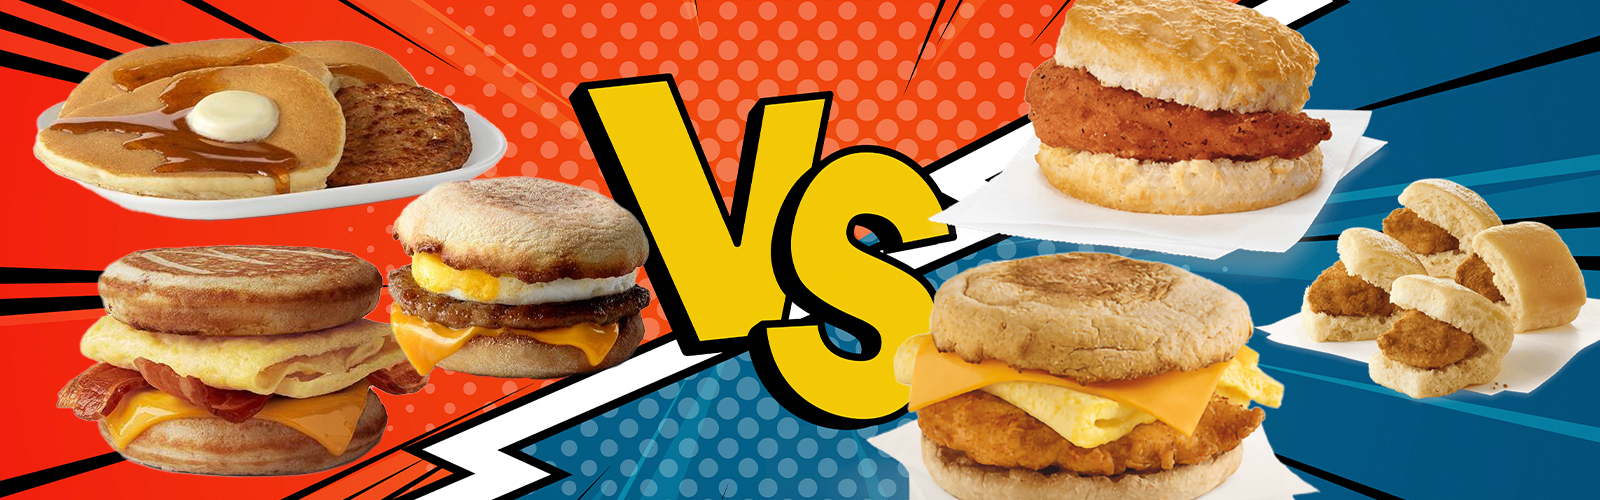 McDonalds vs Chick-fil-A